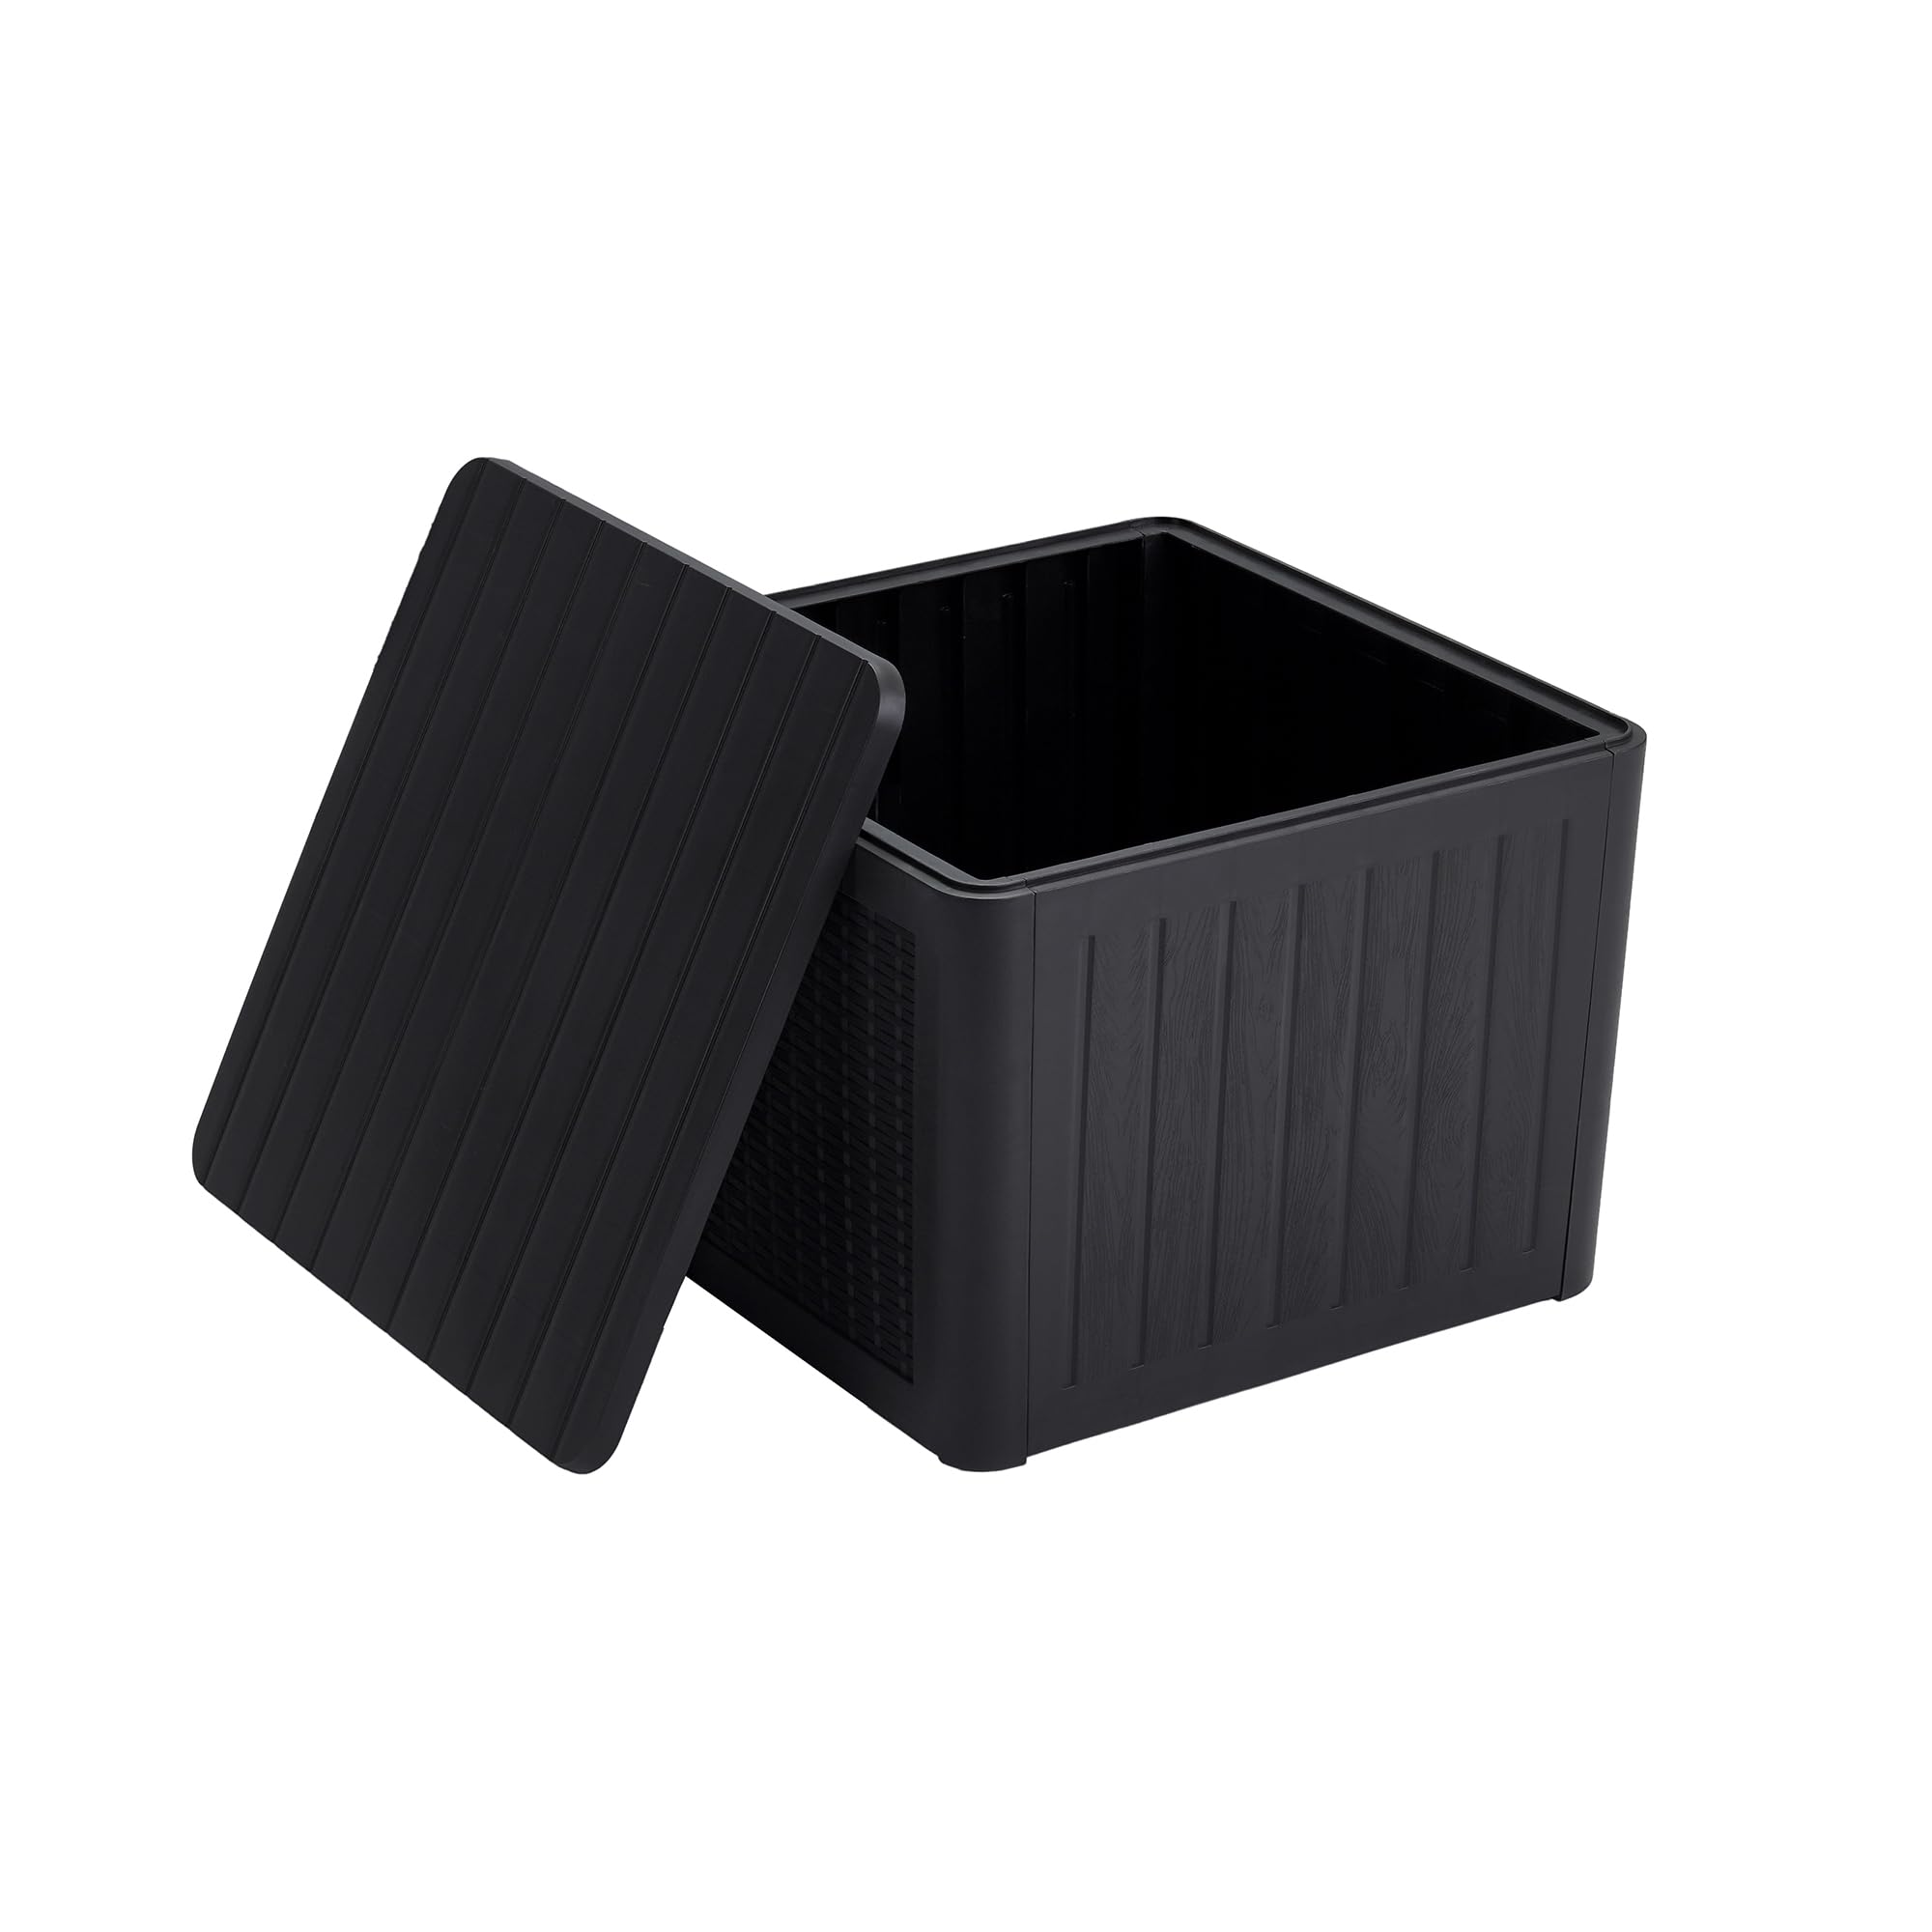 EHHLY Deck Box, Deck Box, Patio Coffee Table with Storage, 36 Gallon, Black